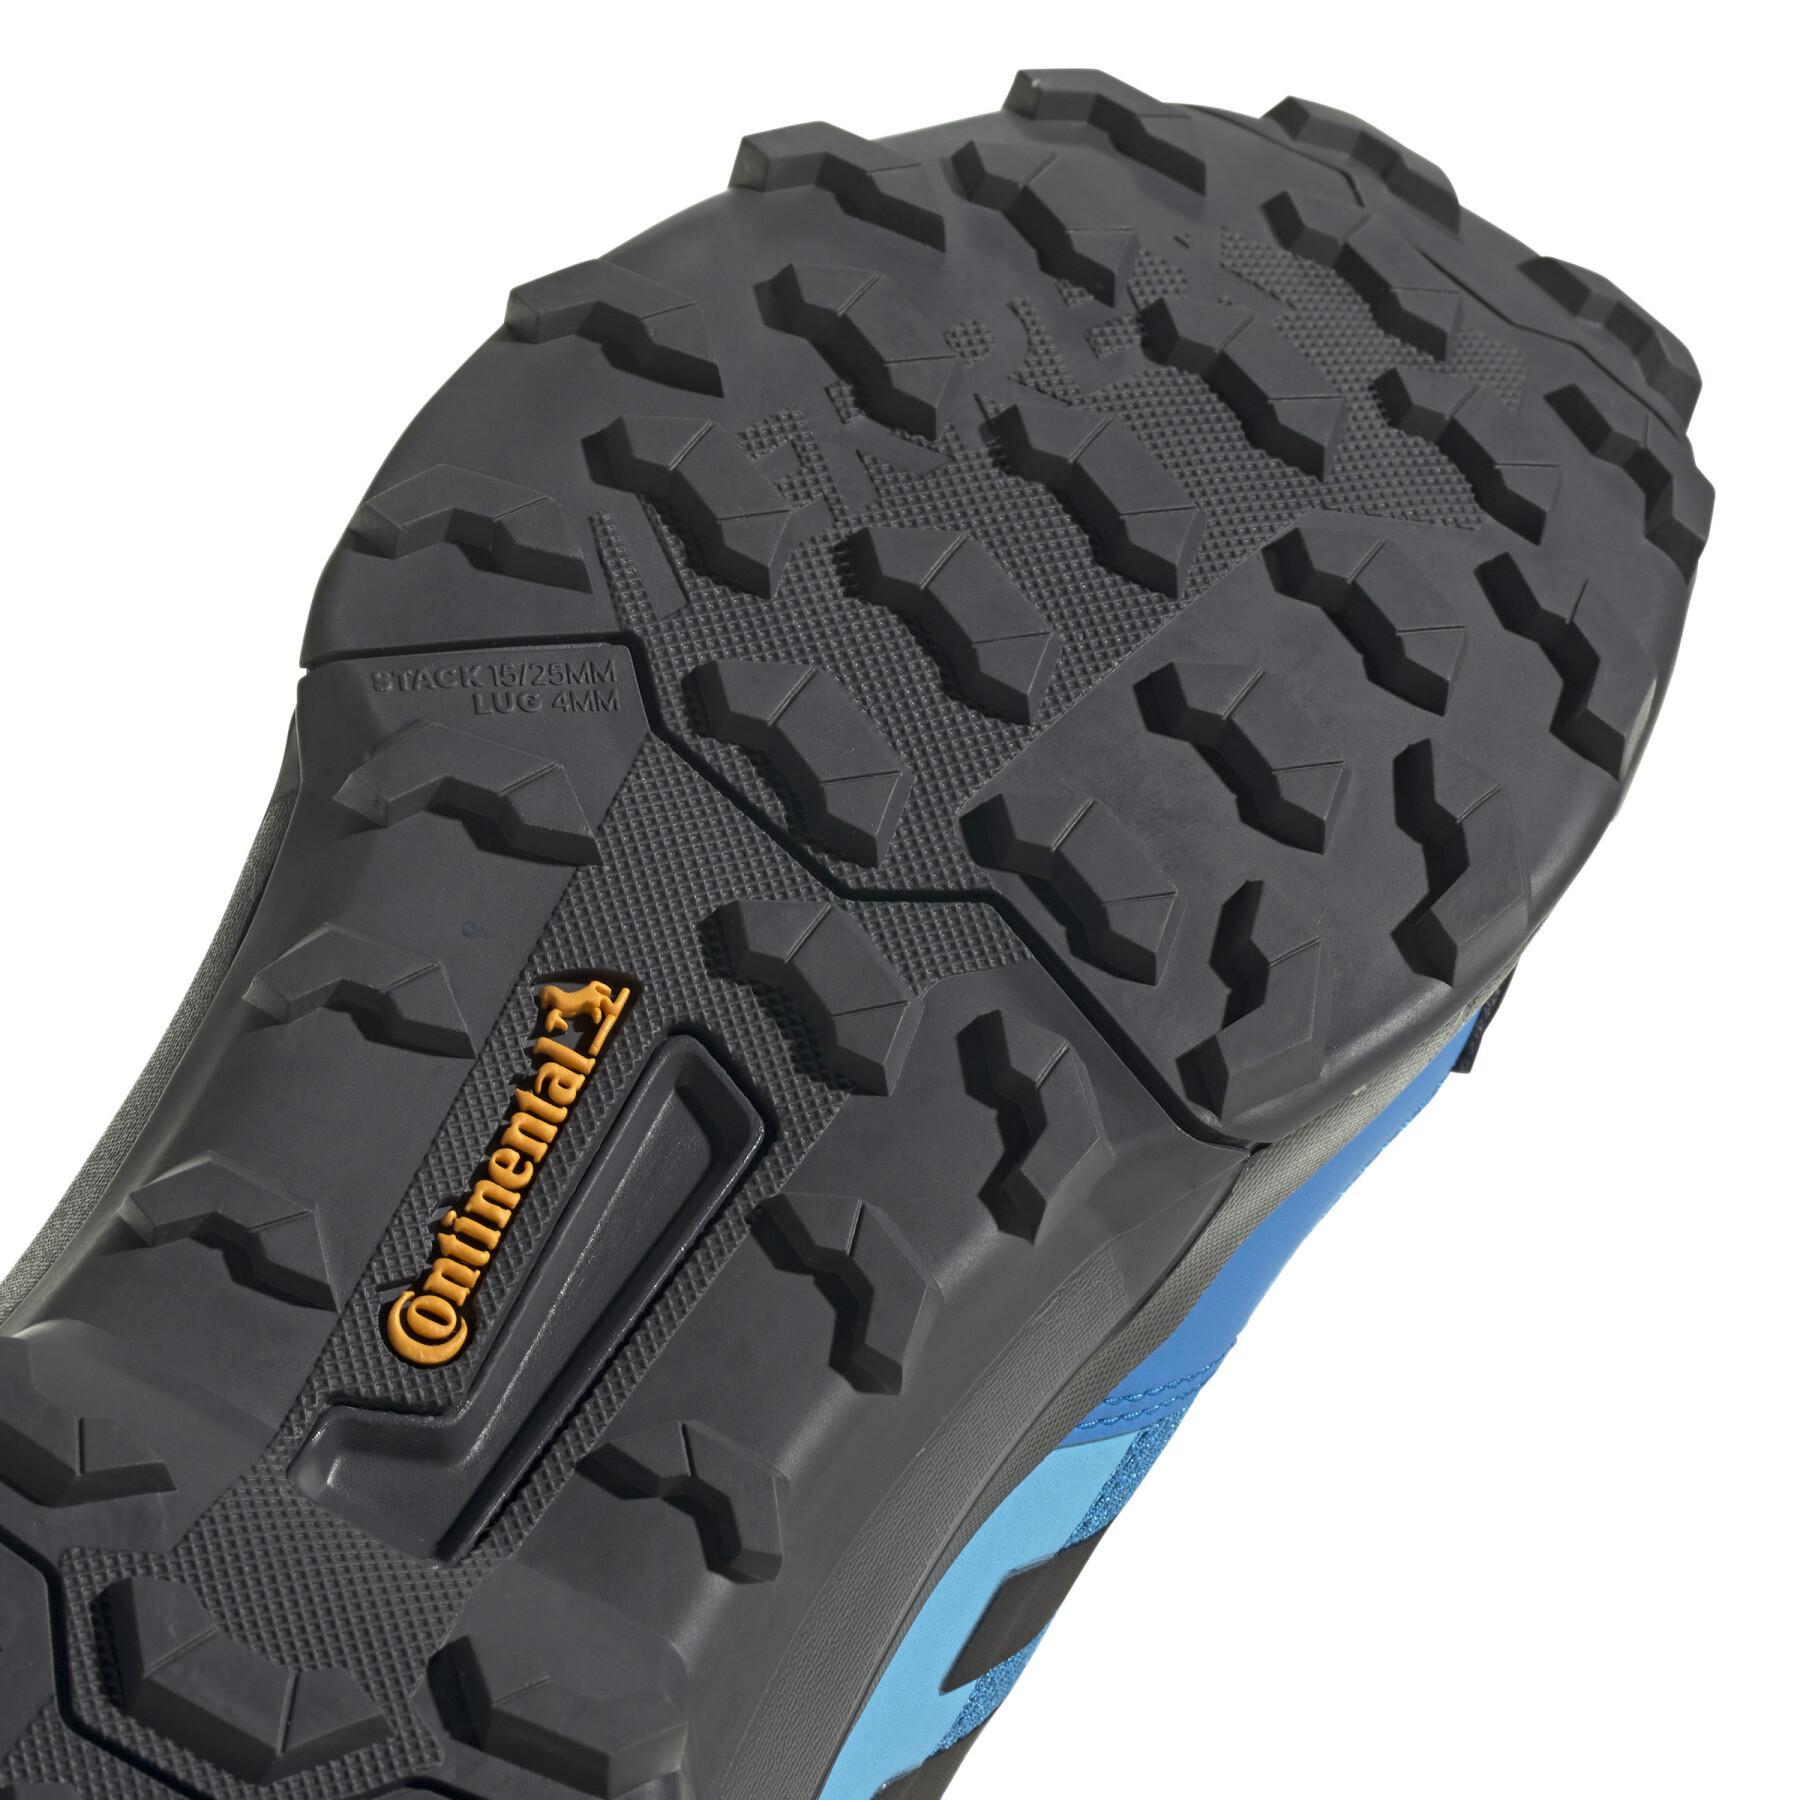 Hiking shoes adidas Terrex Ax4 Primegreen